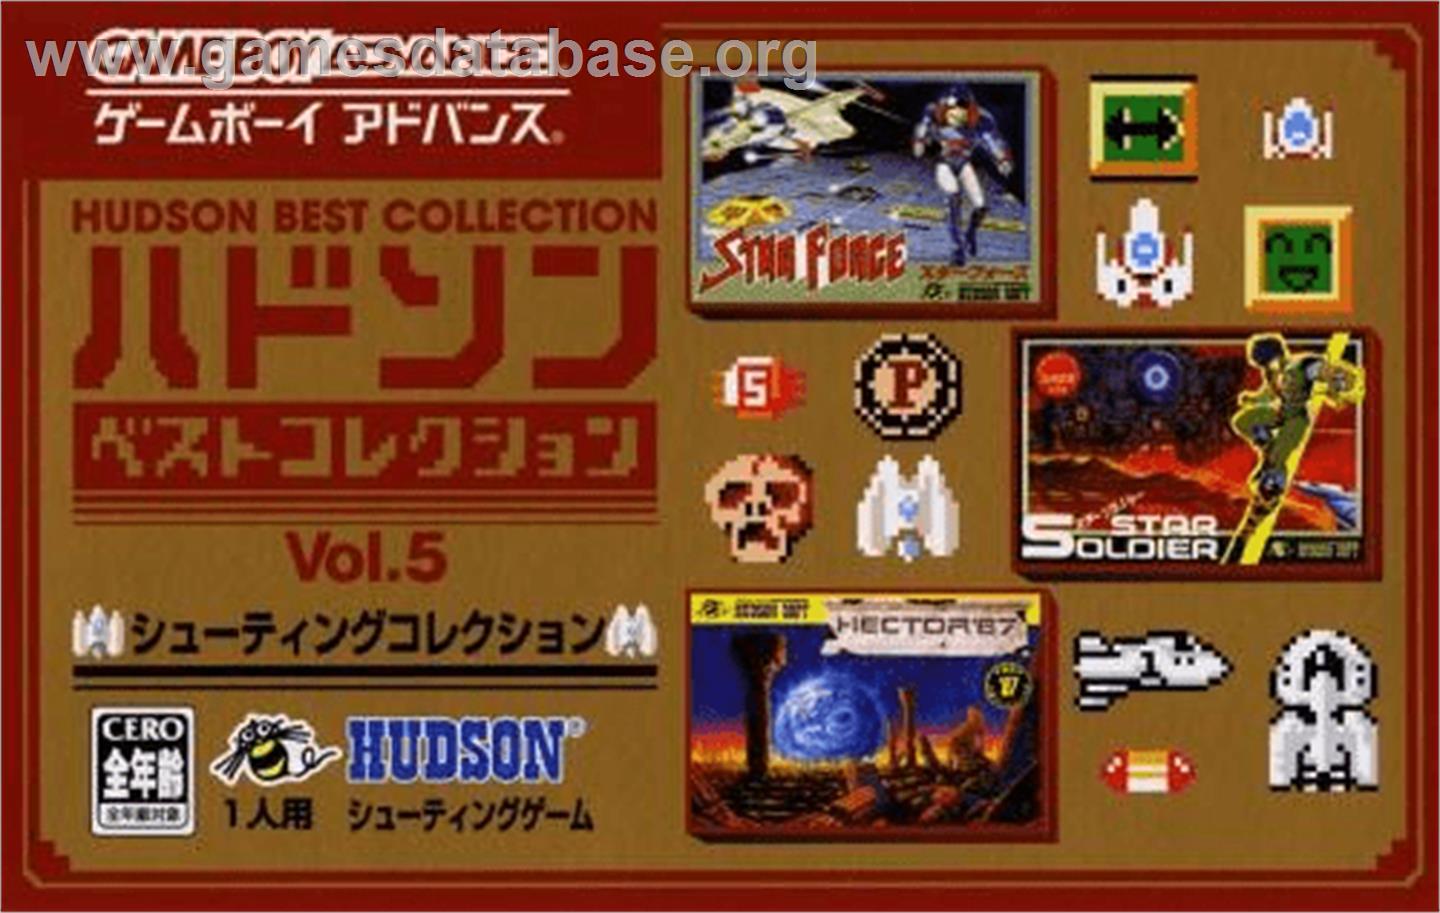 Hudson Best Collection Vol. 5: Shooting Collection - Nintendo Game Boy Advance - Artwork - Box